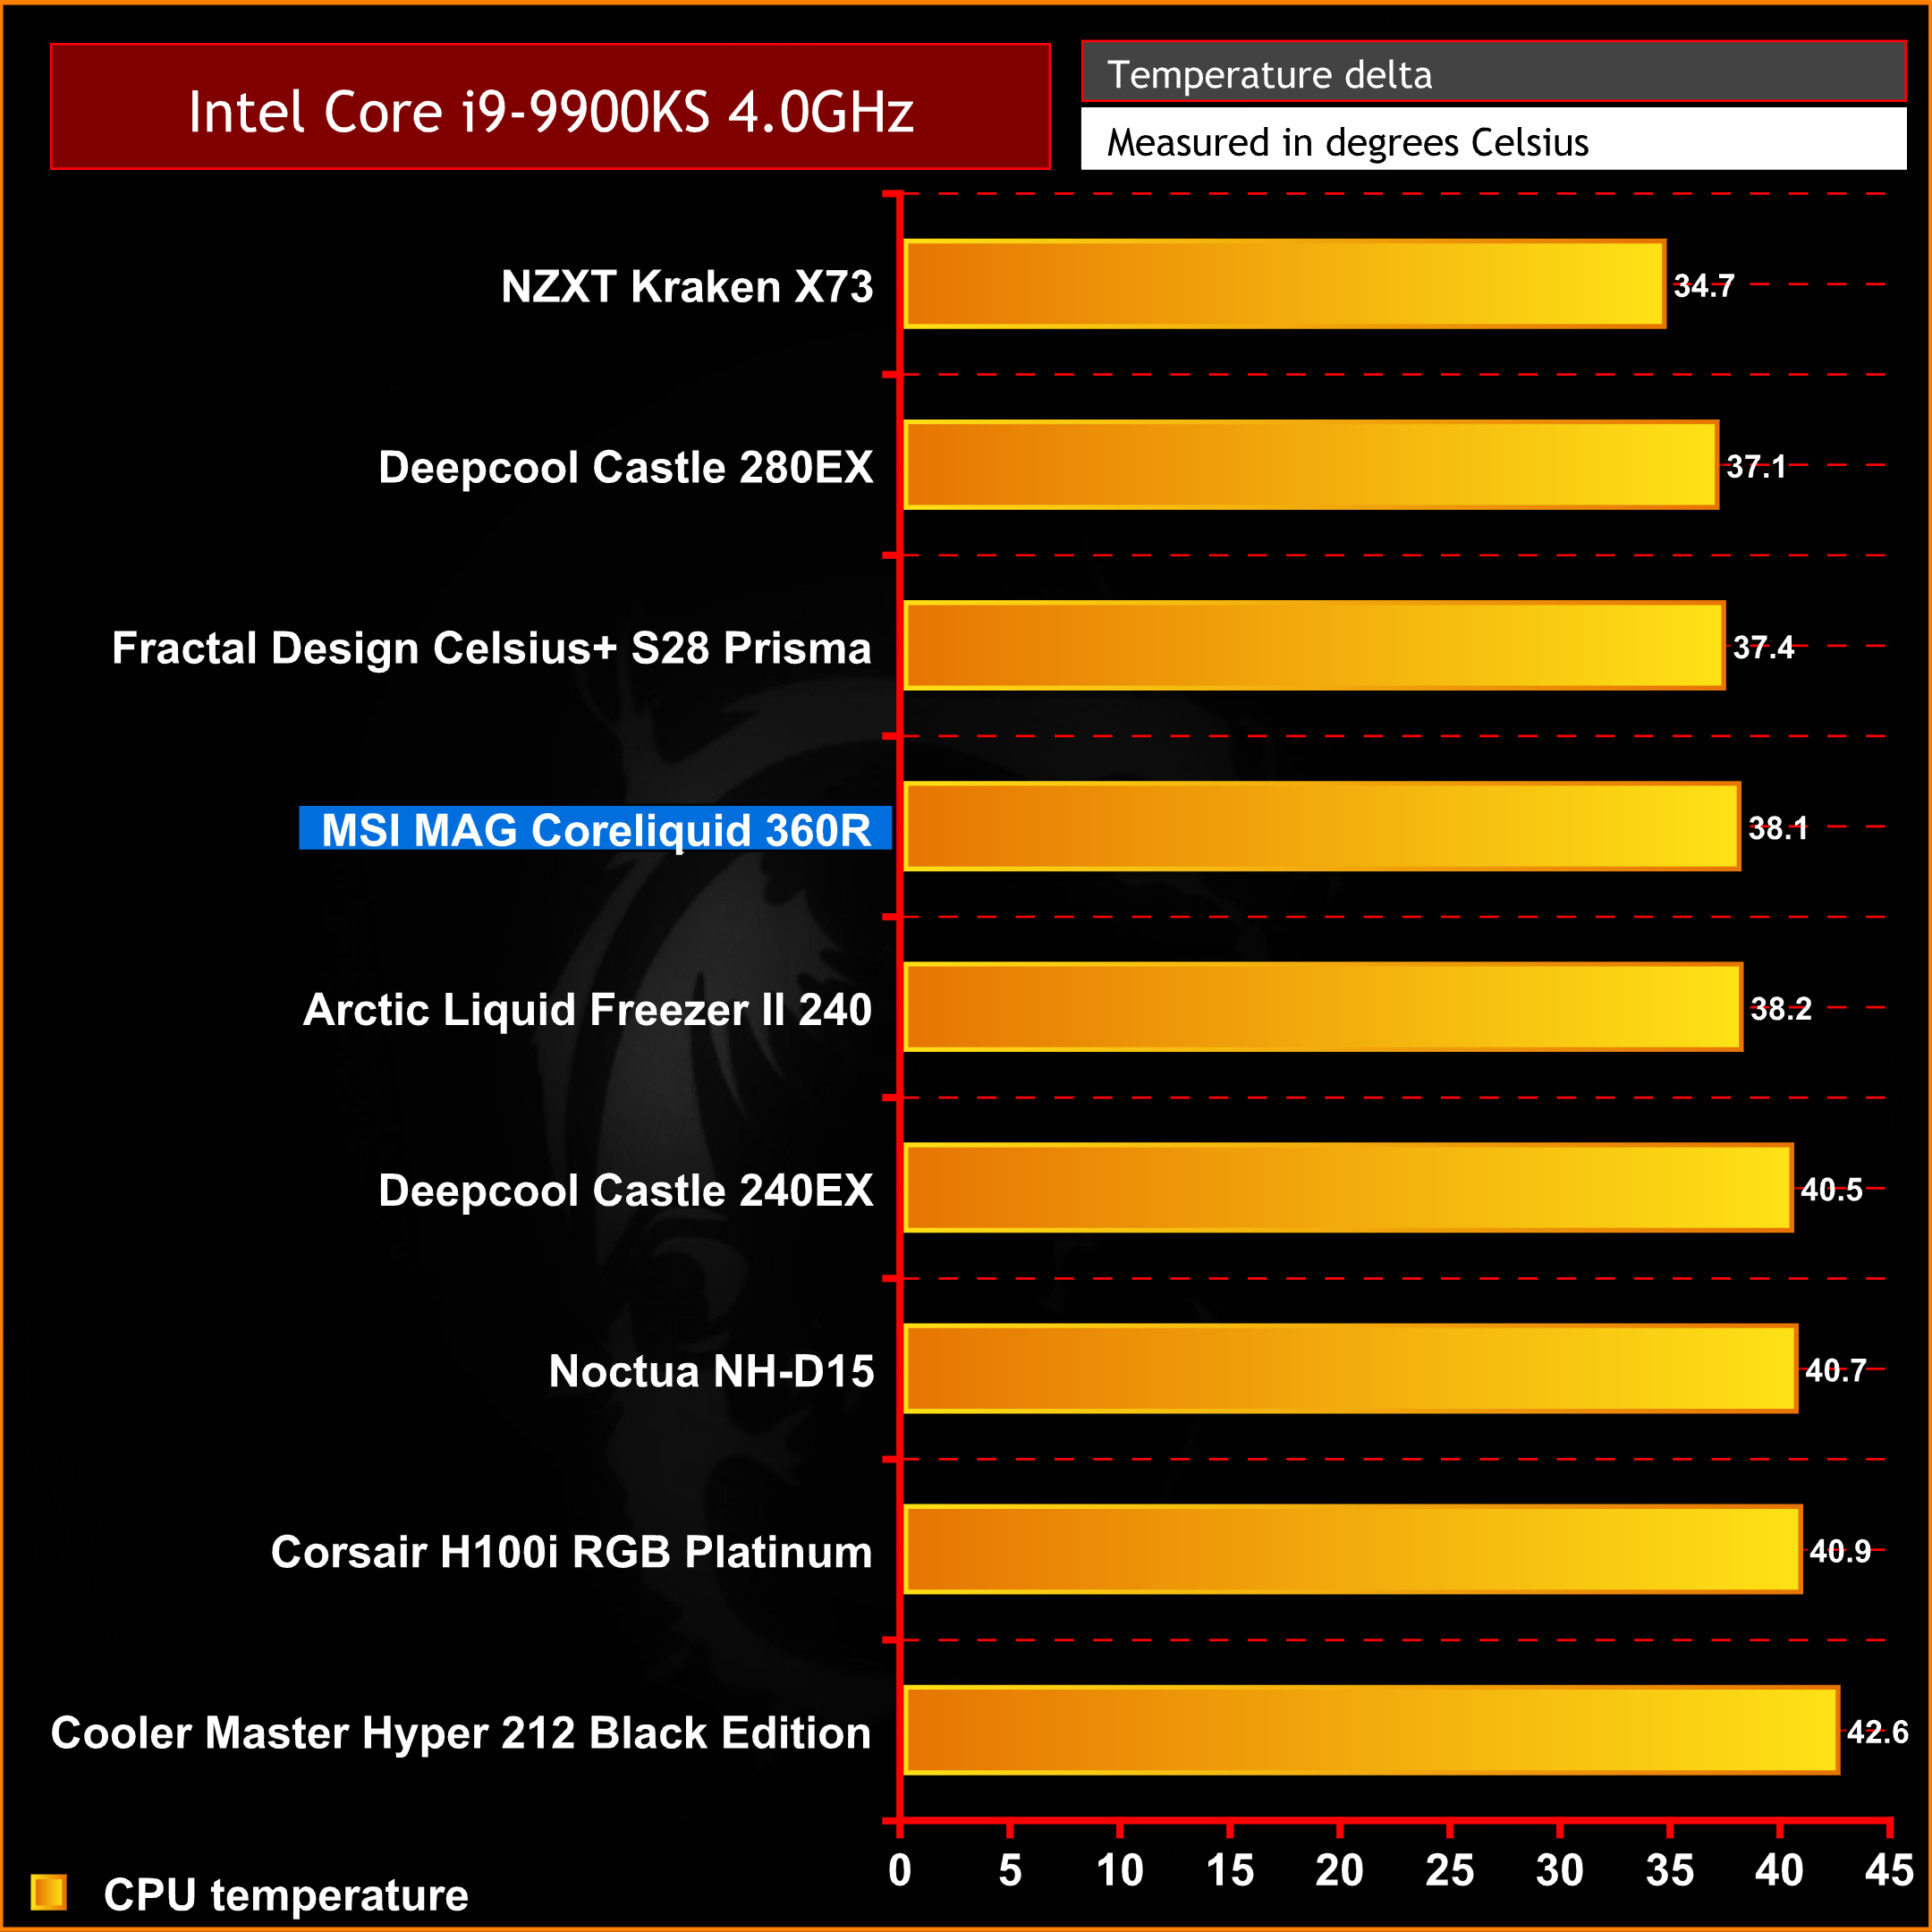 Msi Mag Coreliquid 360r Aio Cpu Cooler Review Kitguru Part 5